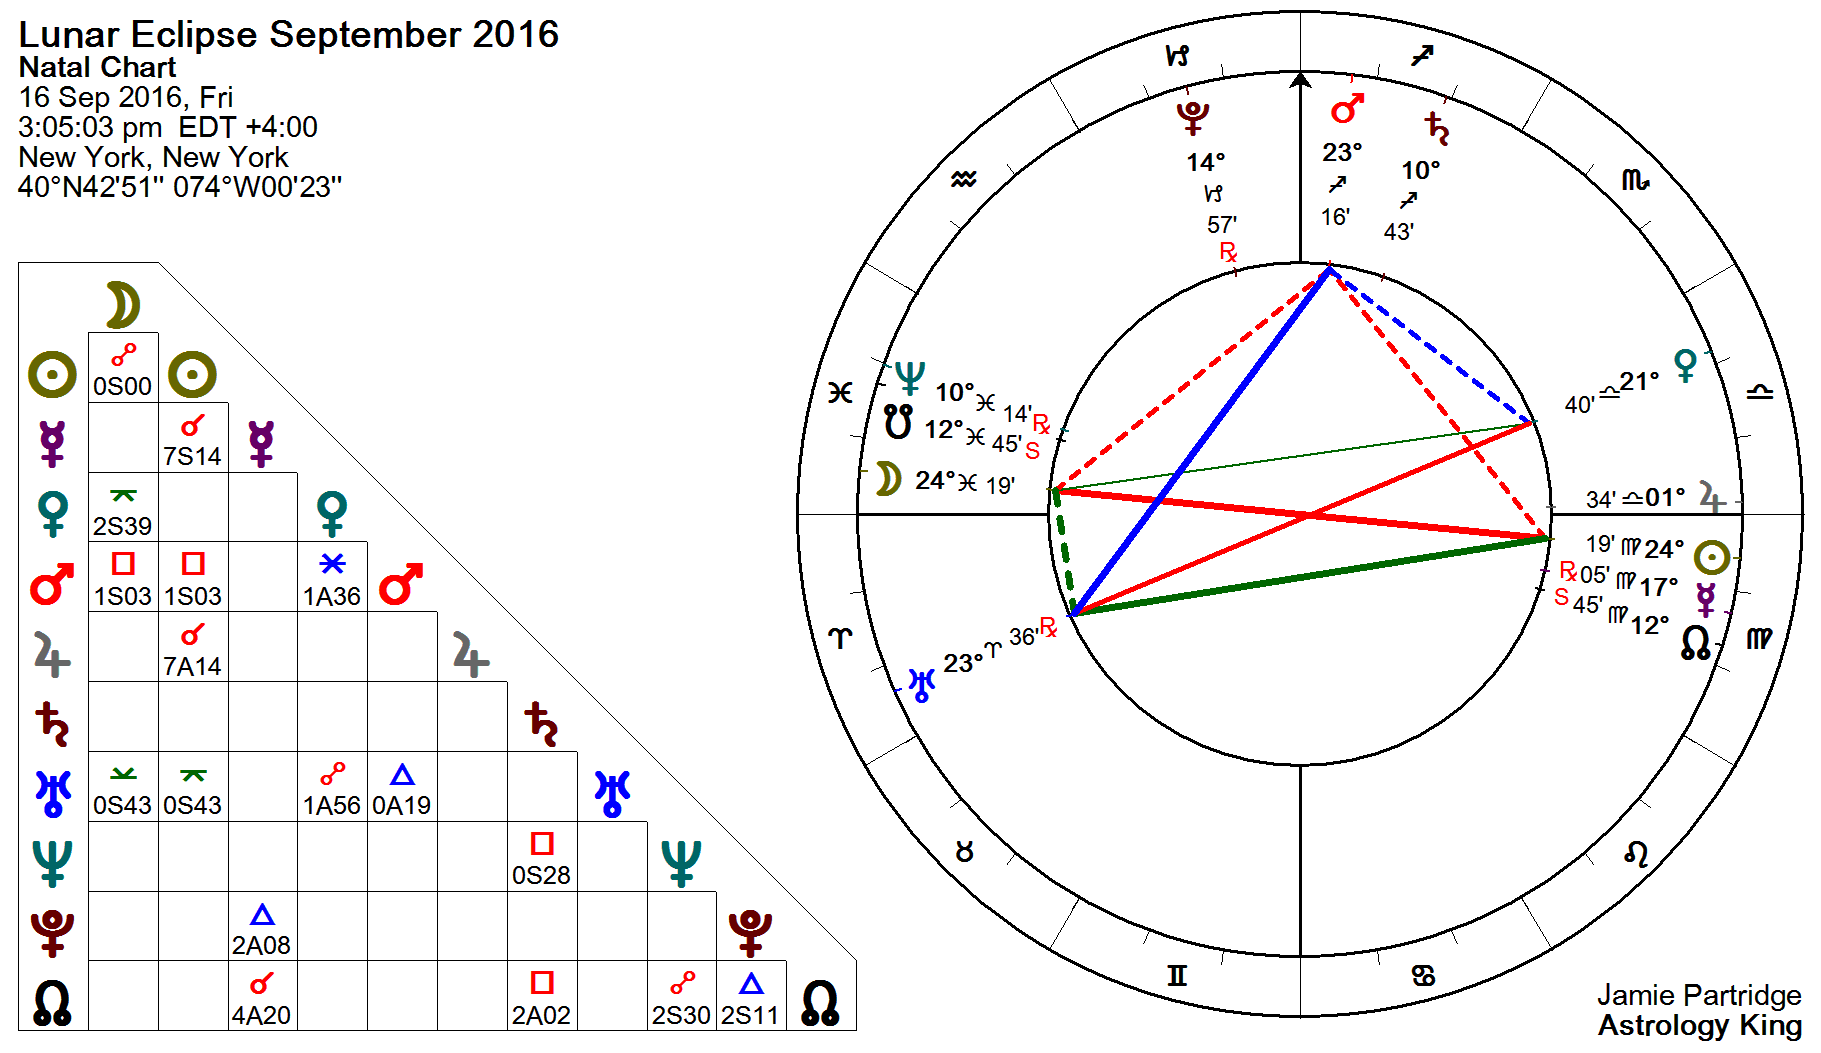 Lunar Eclipse September 2016 Astrology